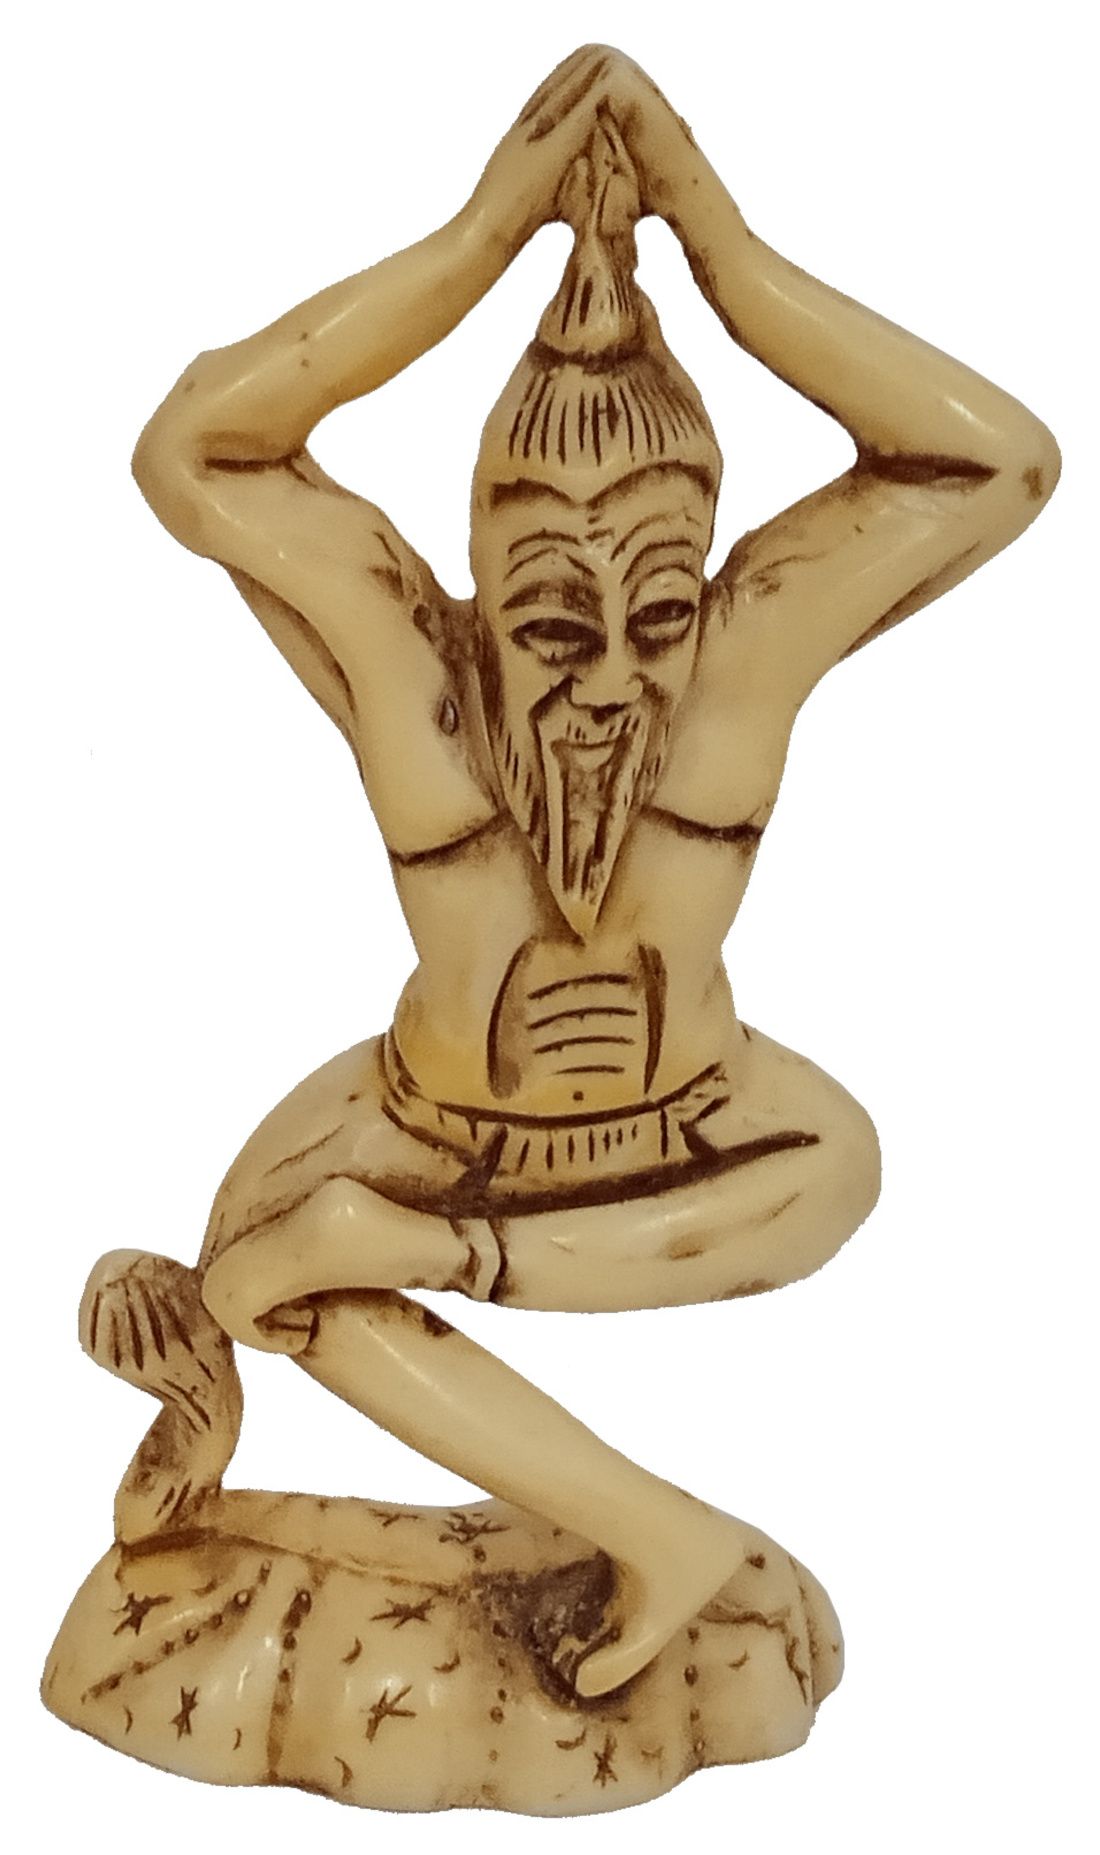 https://cdn.storehippo.com/s/553f8a18ebcbfa6819f79511/6576747beb9bf7eb61706765/11786b-resin-yogi-statue.jpg